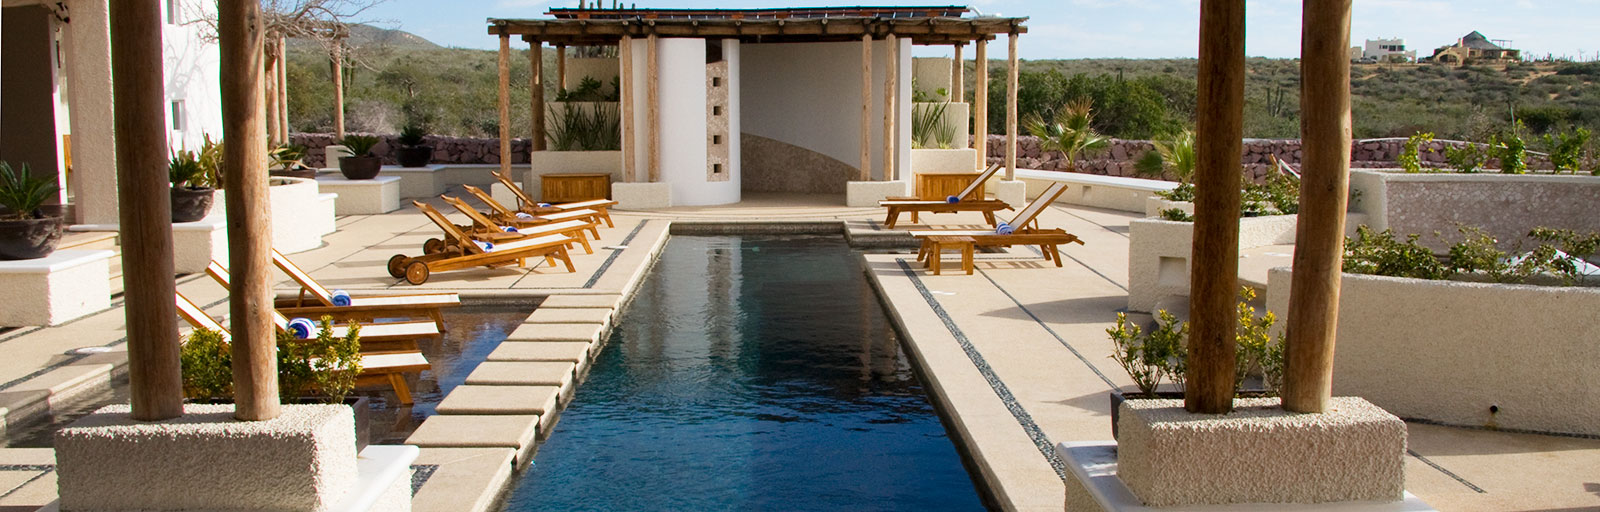 Mexico Yoga Retreat Center in Baja: Swimming Pool & Hot Tub